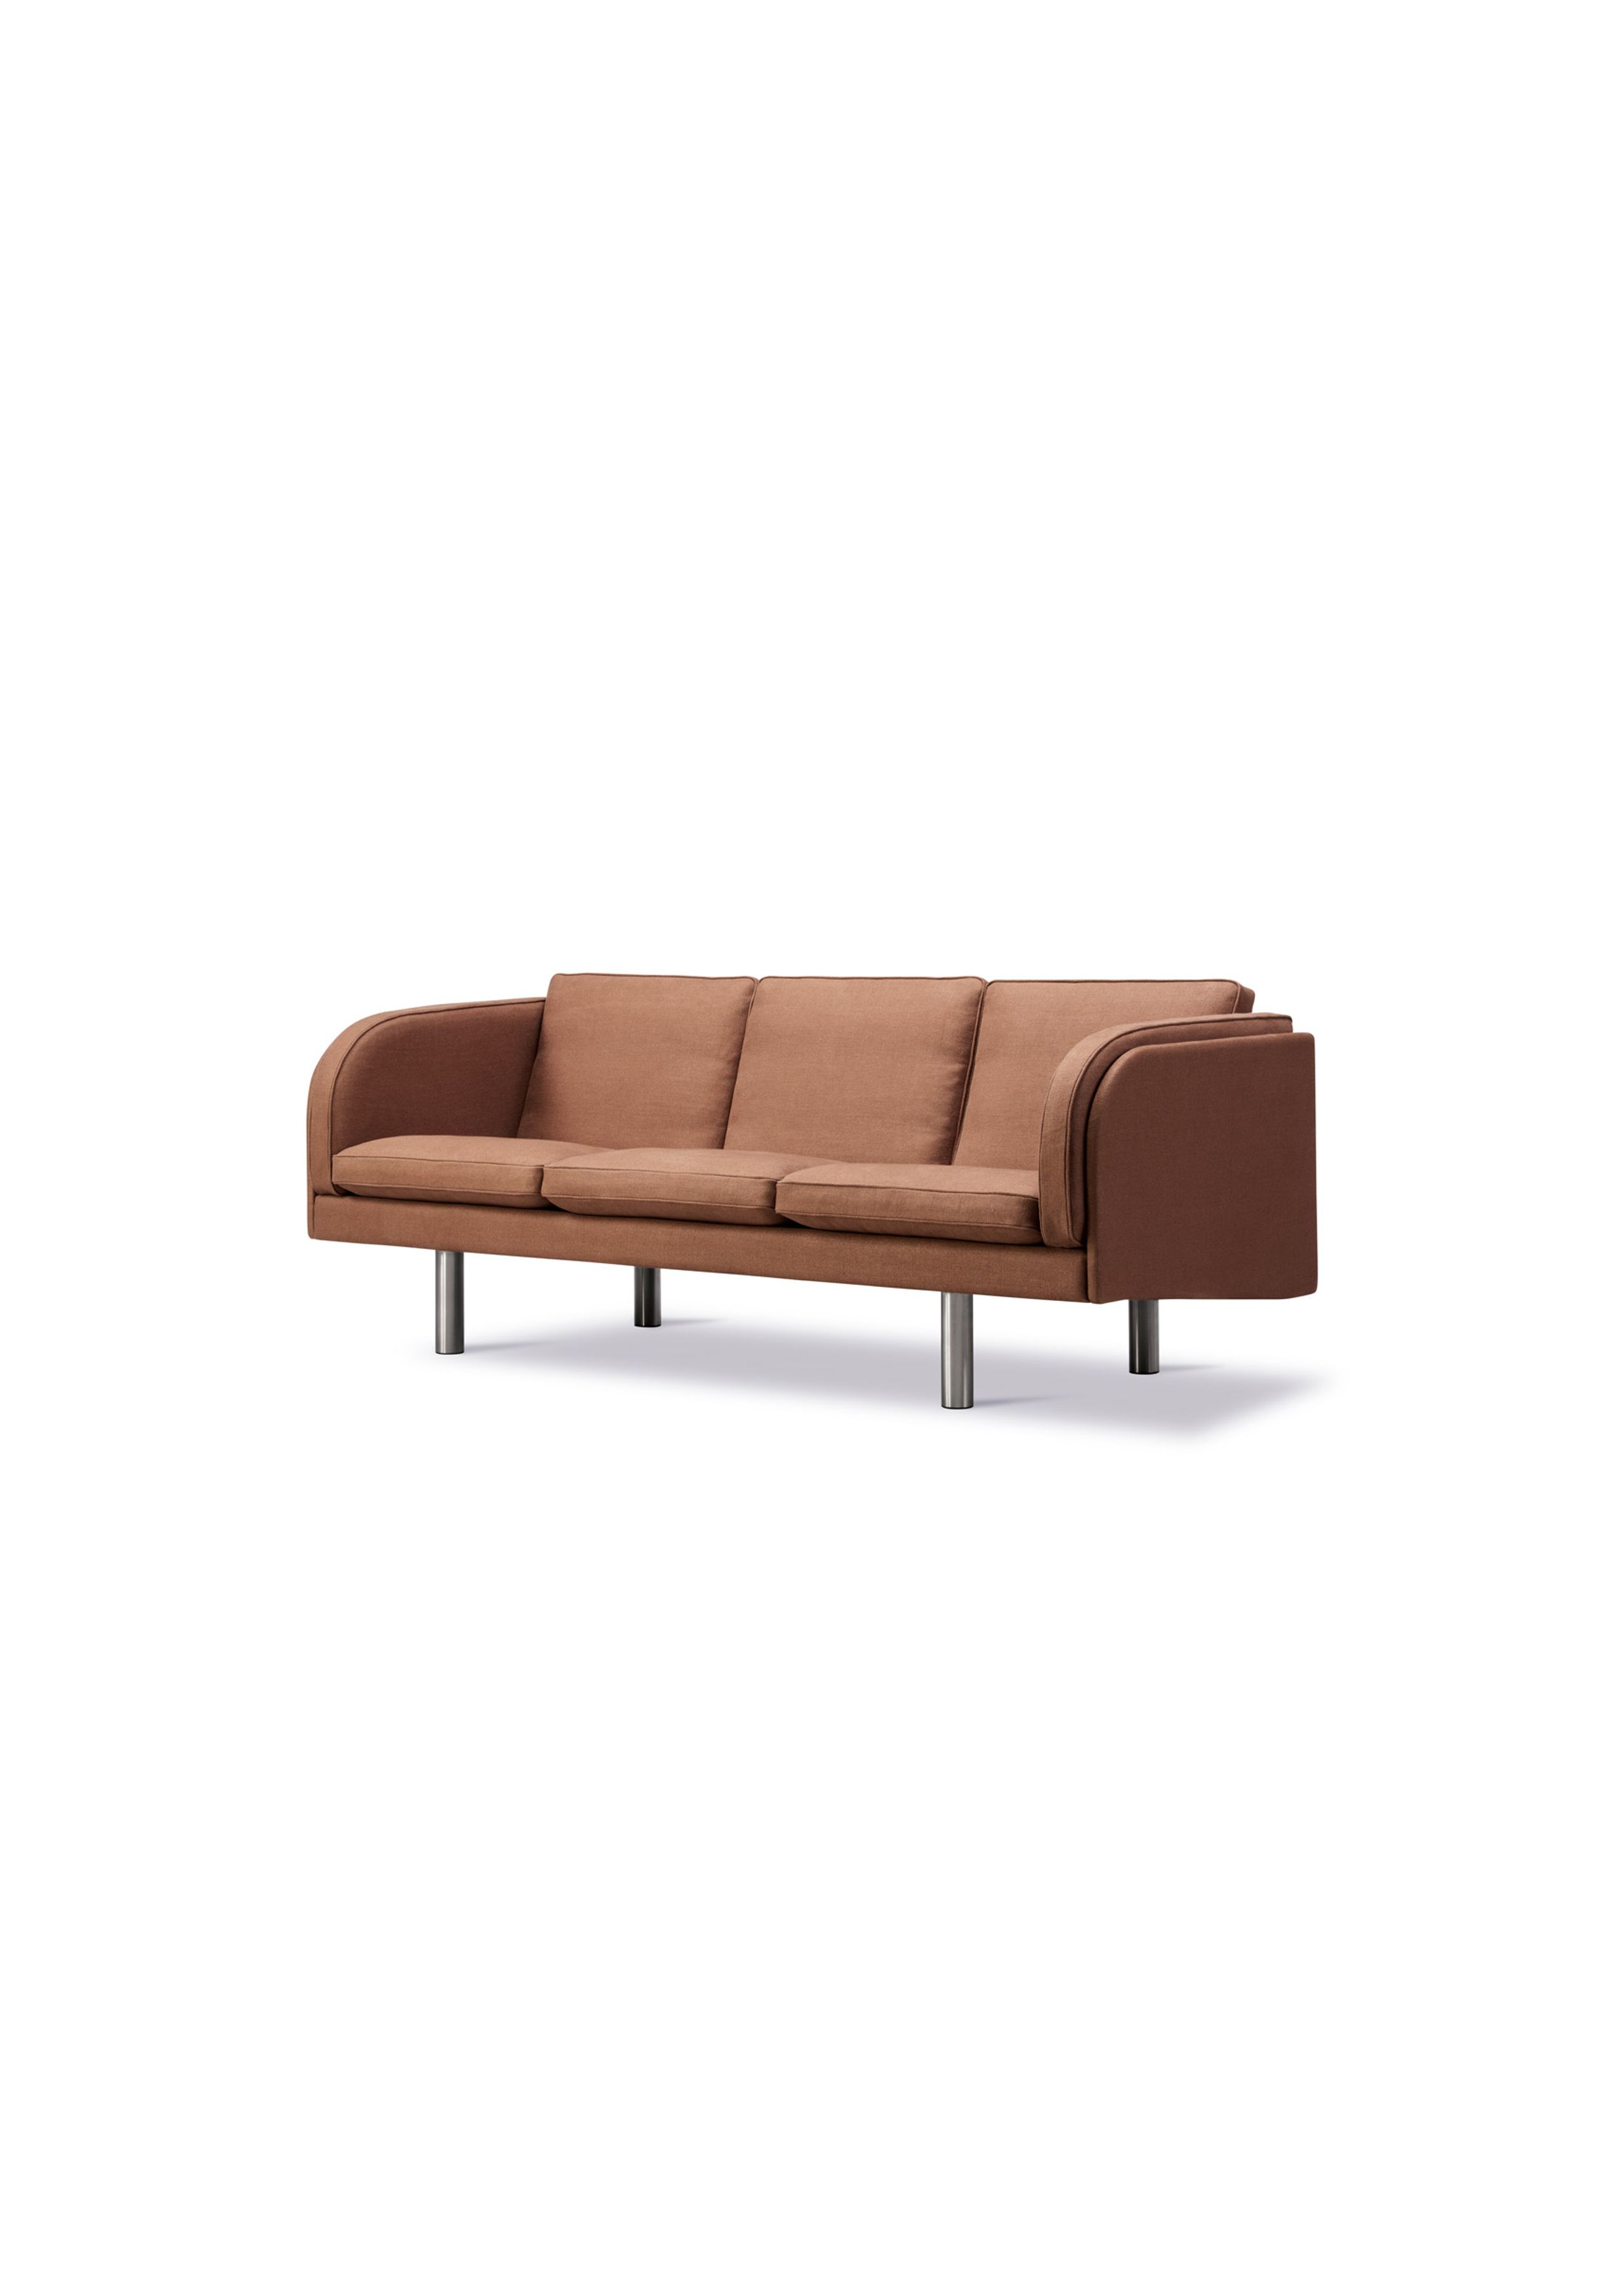 Fredericia Furniture - 3 Person Sofa - JG Sofa 6523 by Jørgen Gammelgaard - Grand Linen 4803 / Brushed Stainless Steel